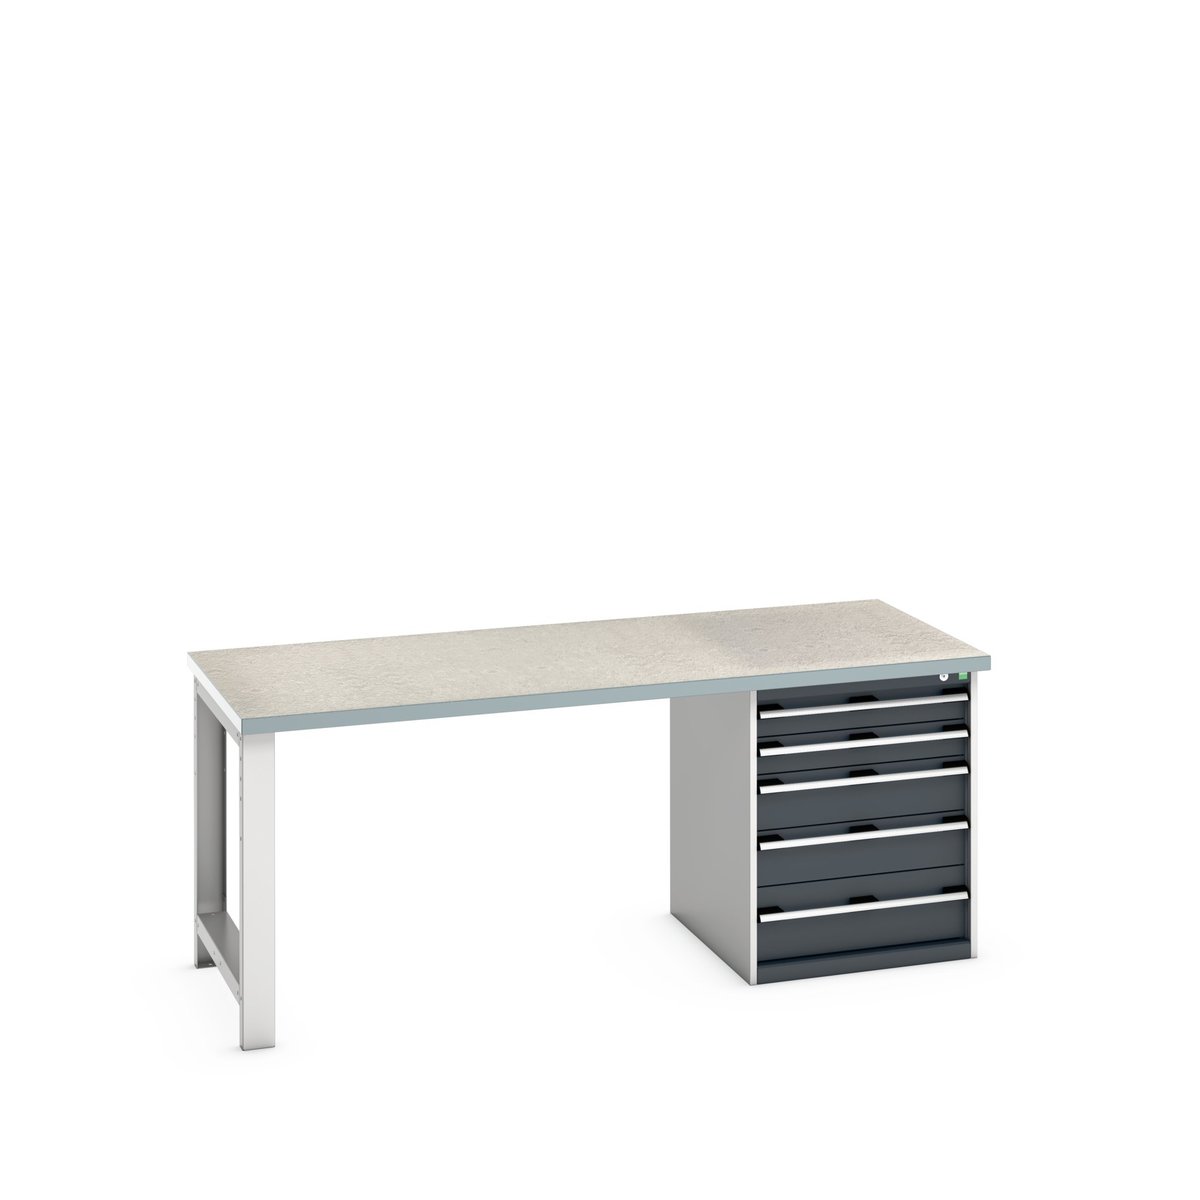 41004112. - cubio pedestal bench (lino)